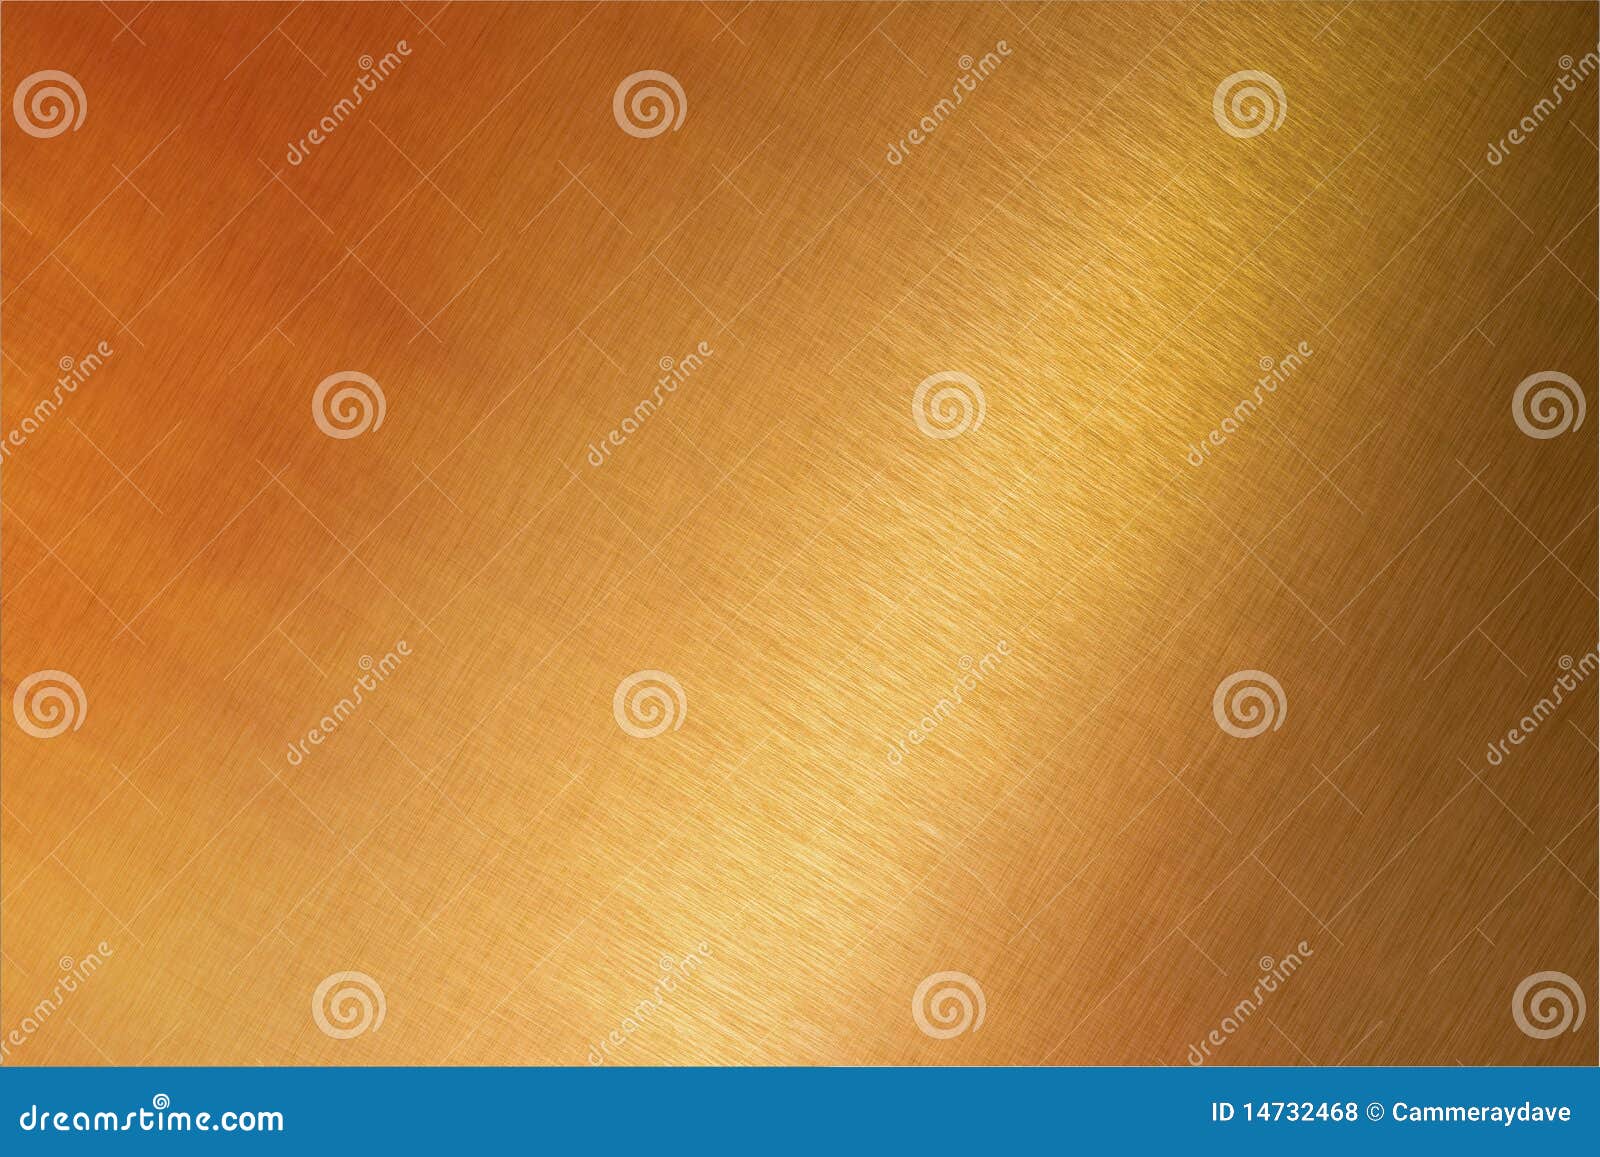 bronze gold copper metal background